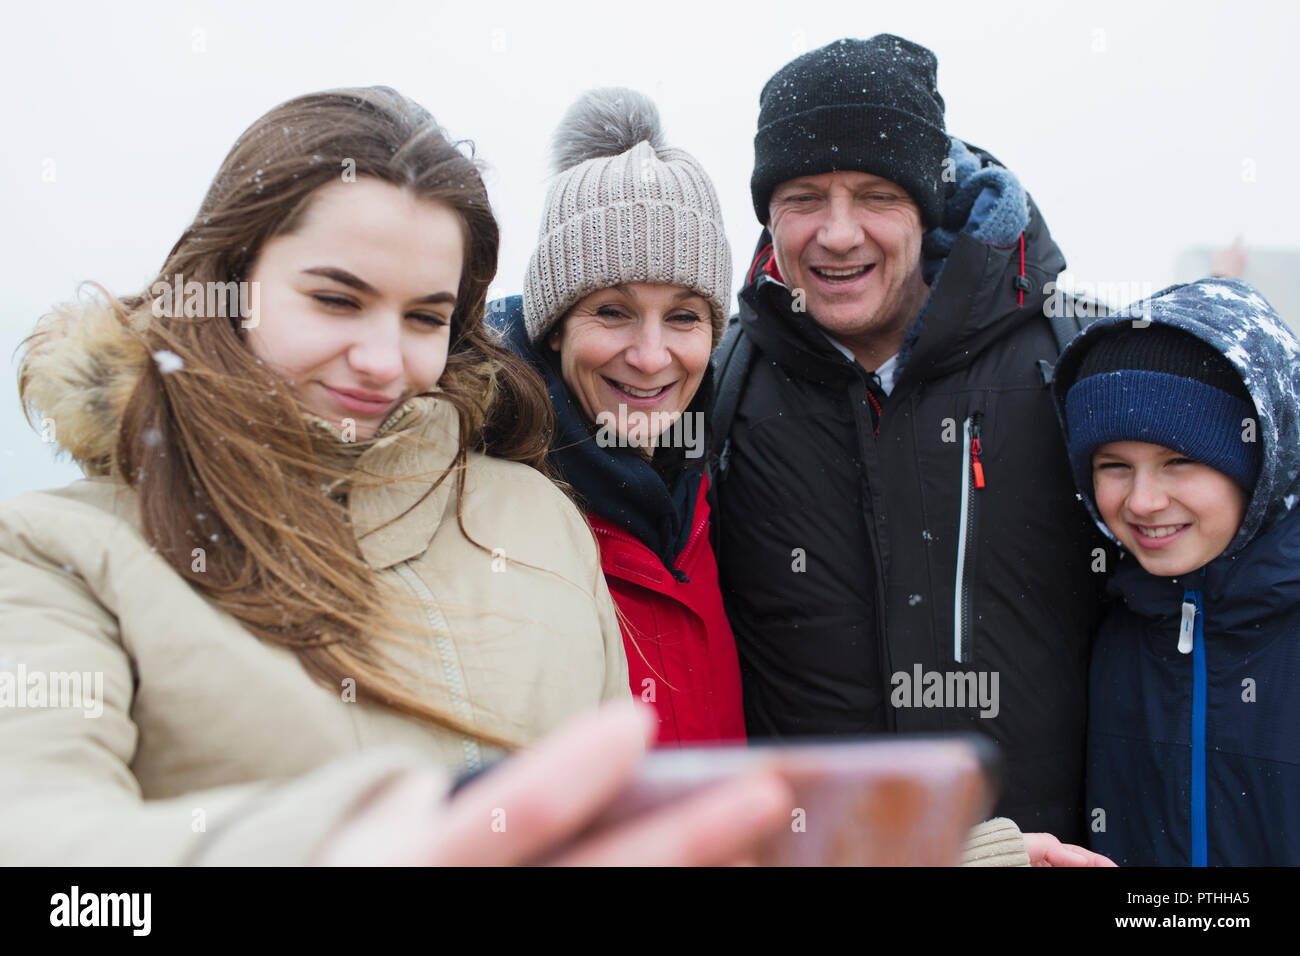 Snow falling on smiling family taking selfie Stock Photo